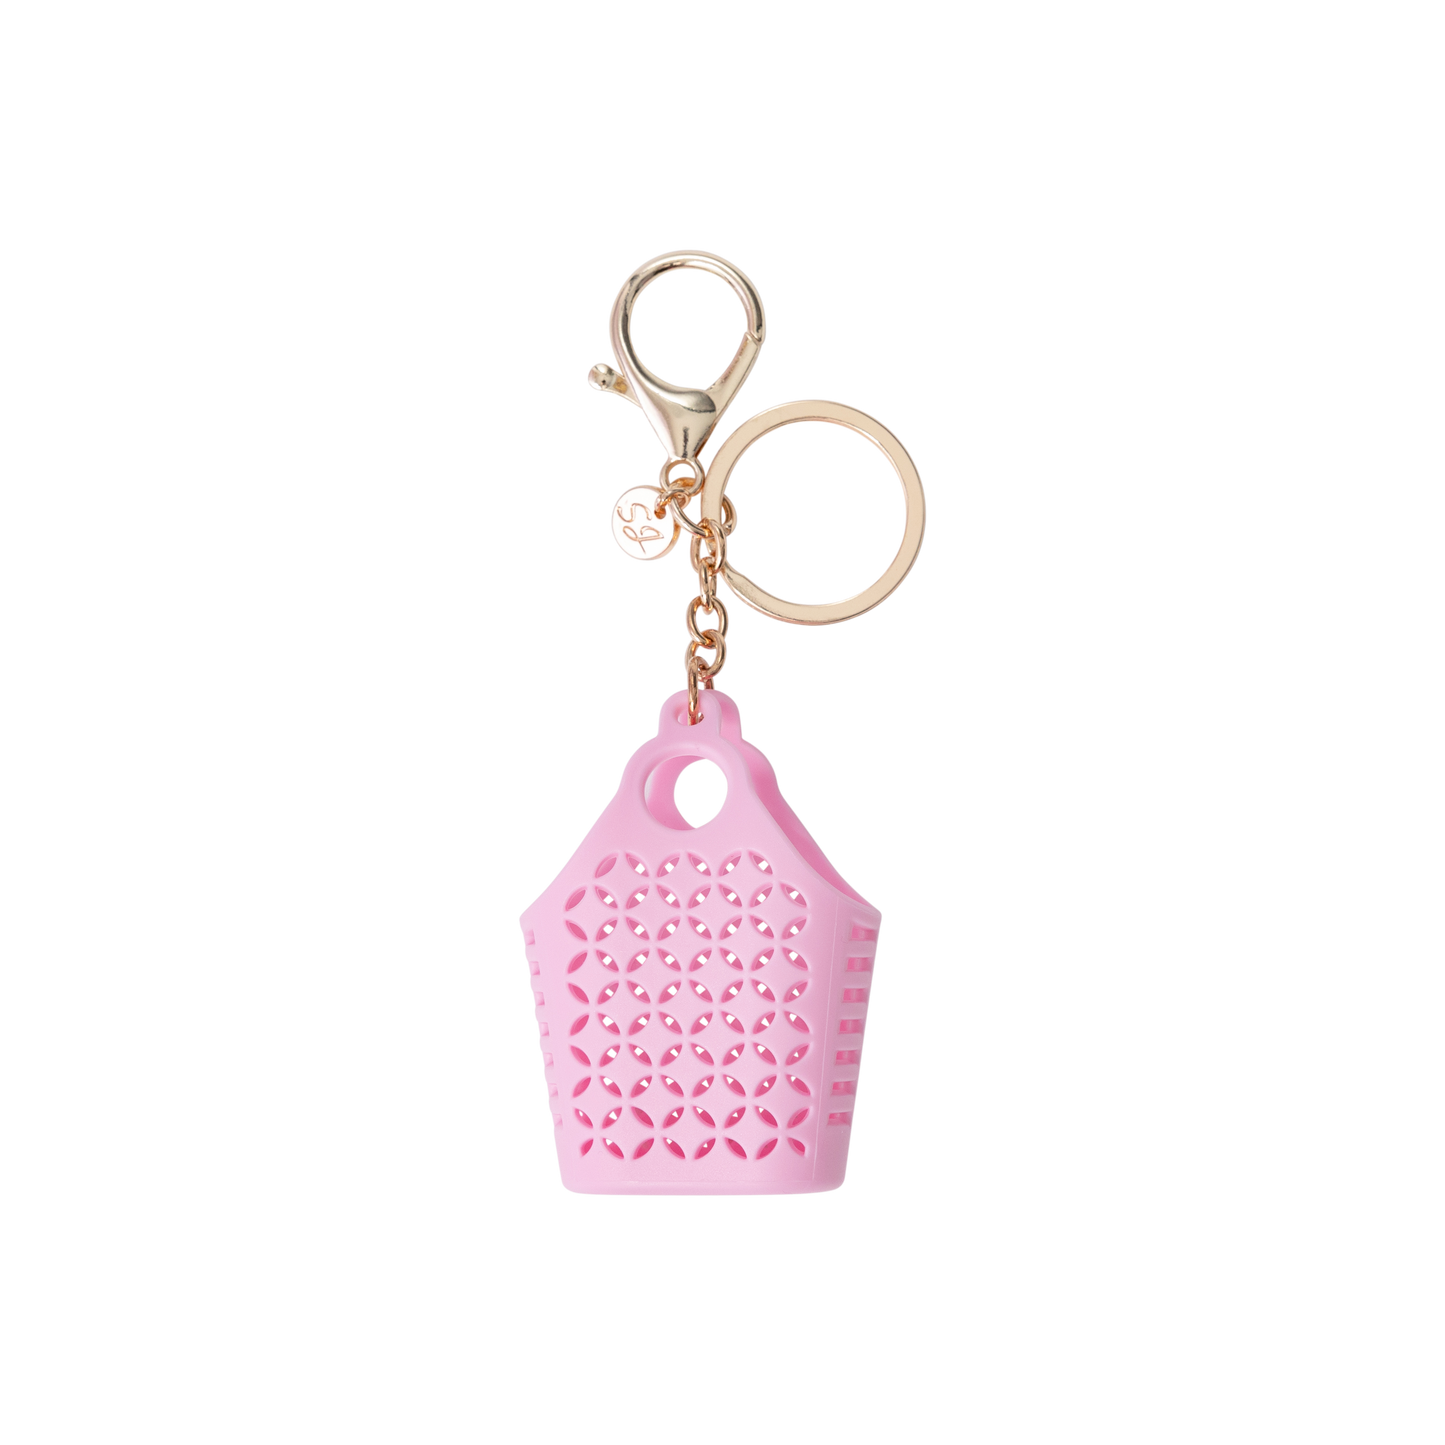 Itty Bitty Bag Charm - Atomic Bubblegum Pink